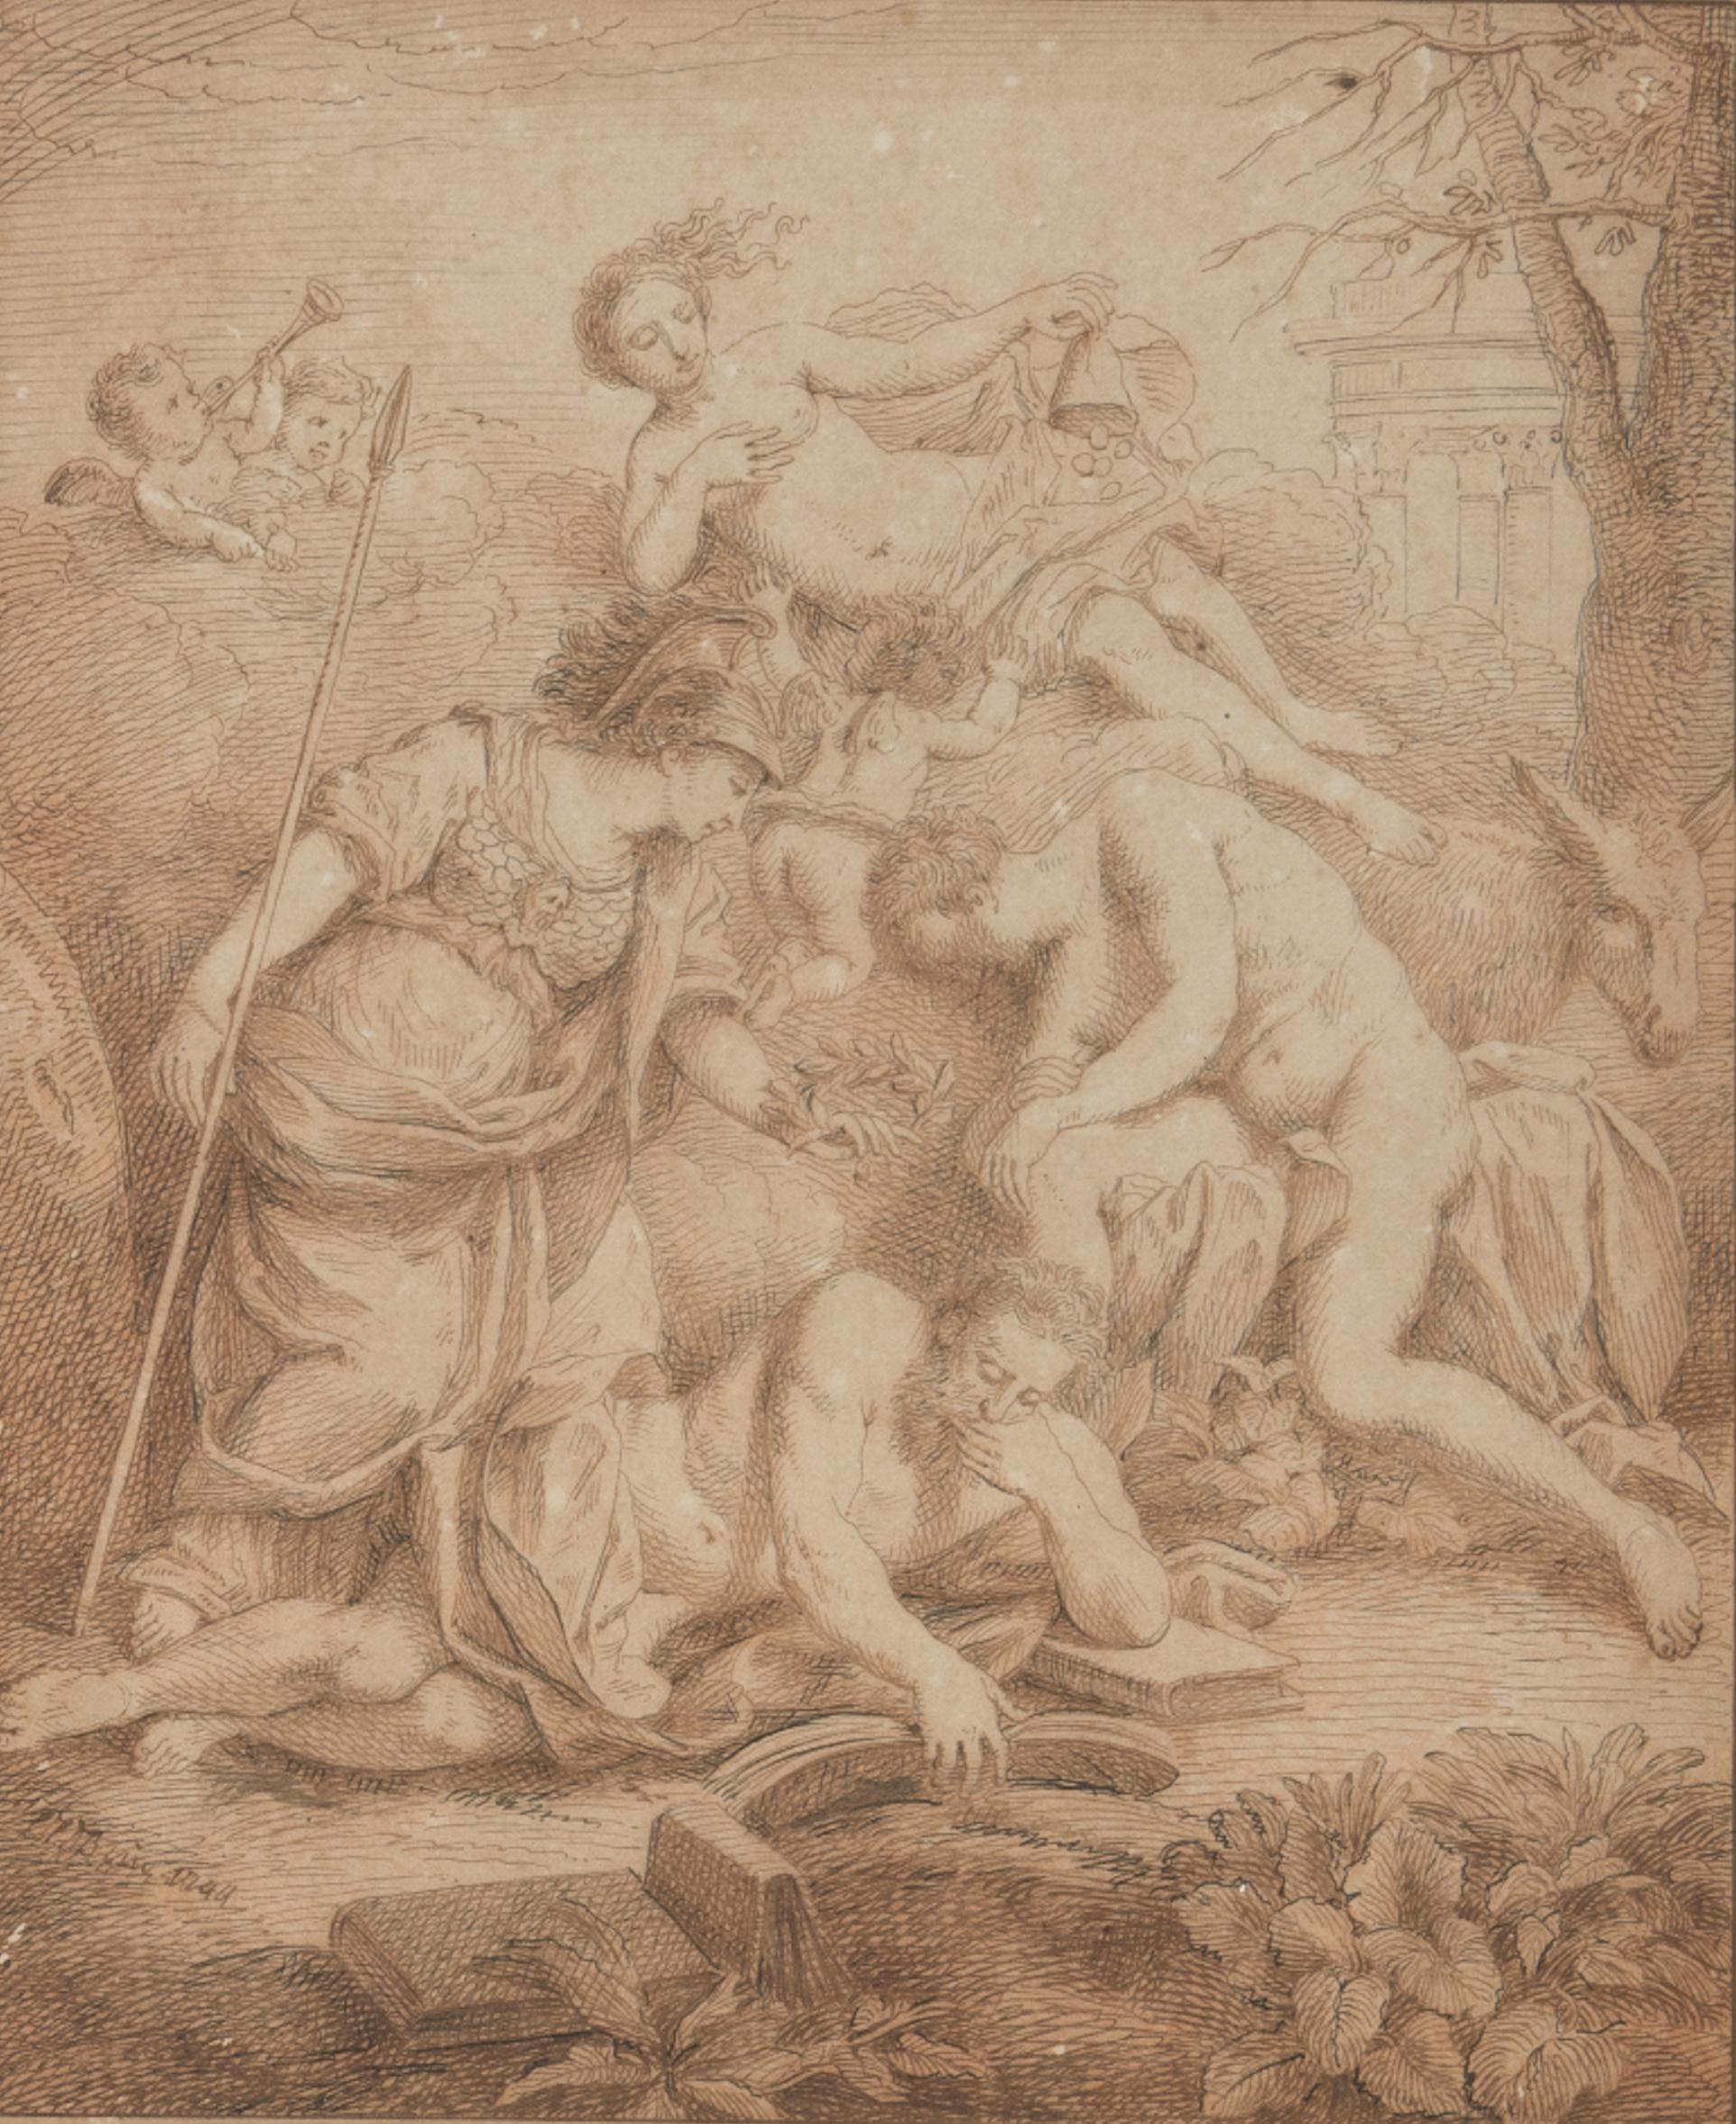 Allegorische Szene – Sepia-Zeichnung, L.F. zugeschrieben. Dubourg – Anfang 1700